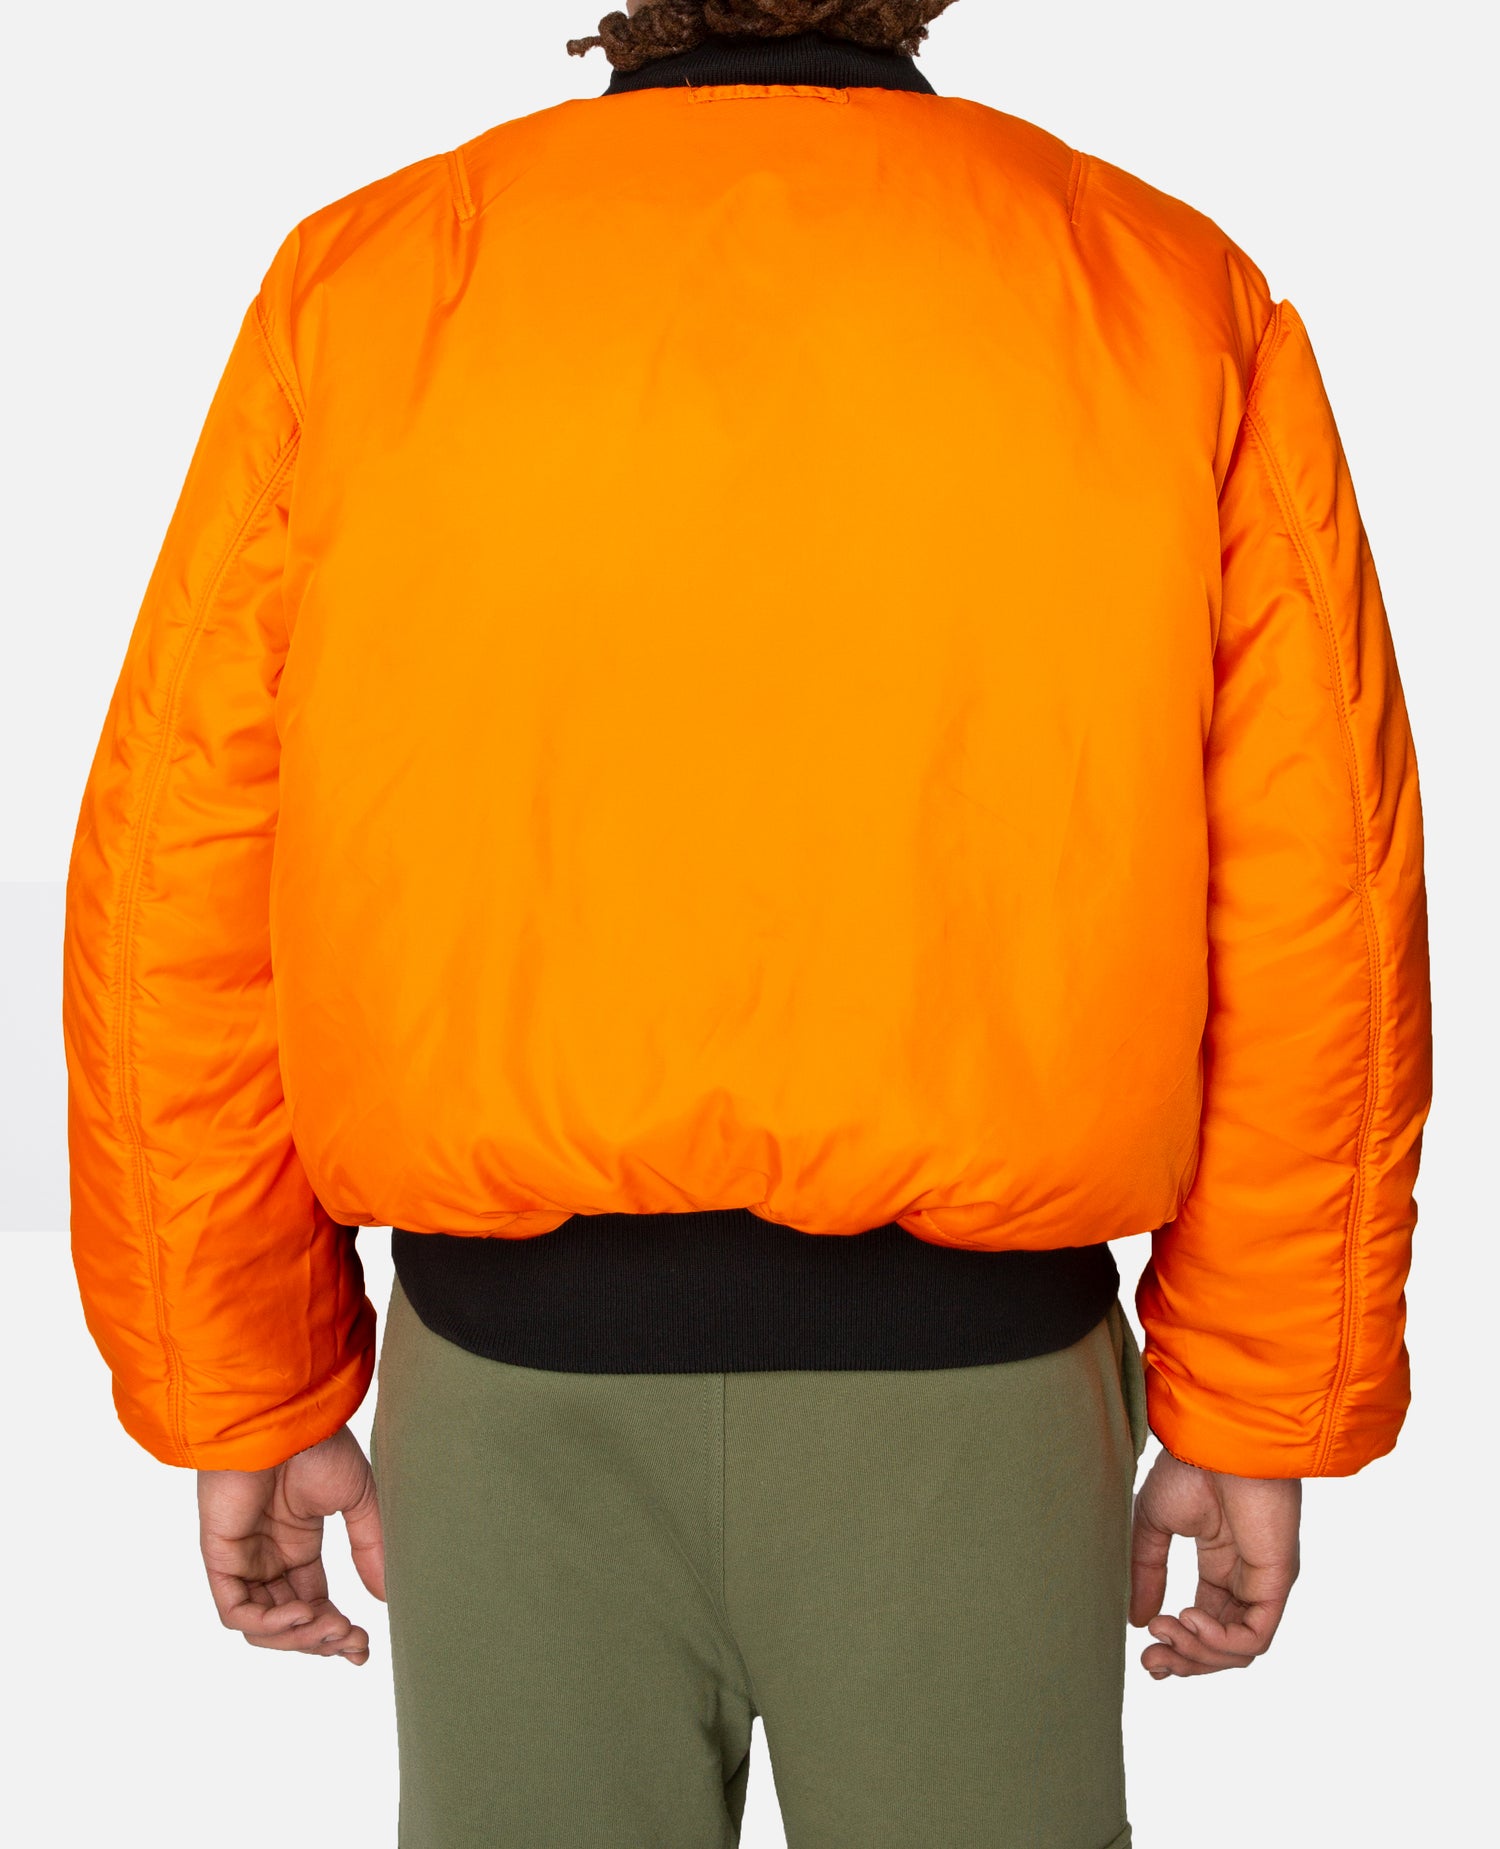 Store Exclusive: Patta x Alpha Industries MA-1 Amsterdam Jacket (Black/Orange)